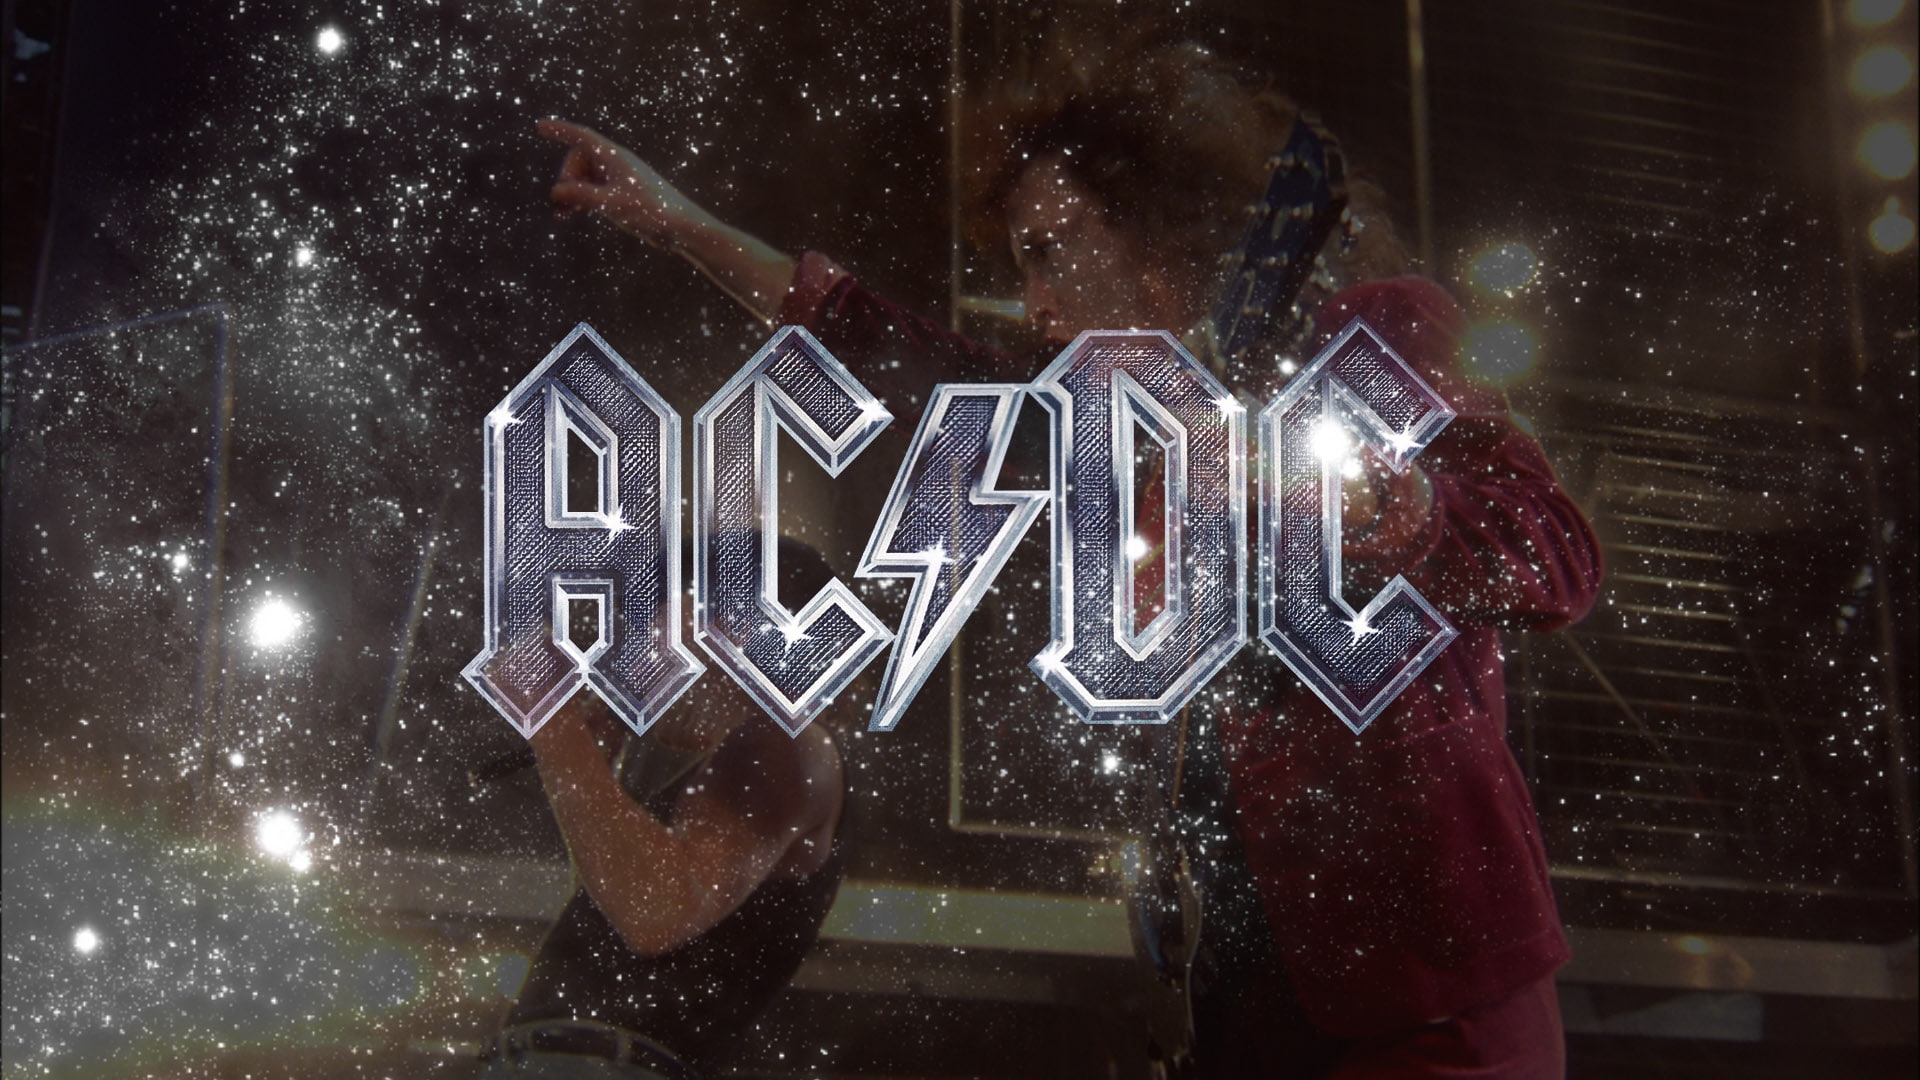 ac dc, acdc, album, bands, classic, concert, covers, entertainment